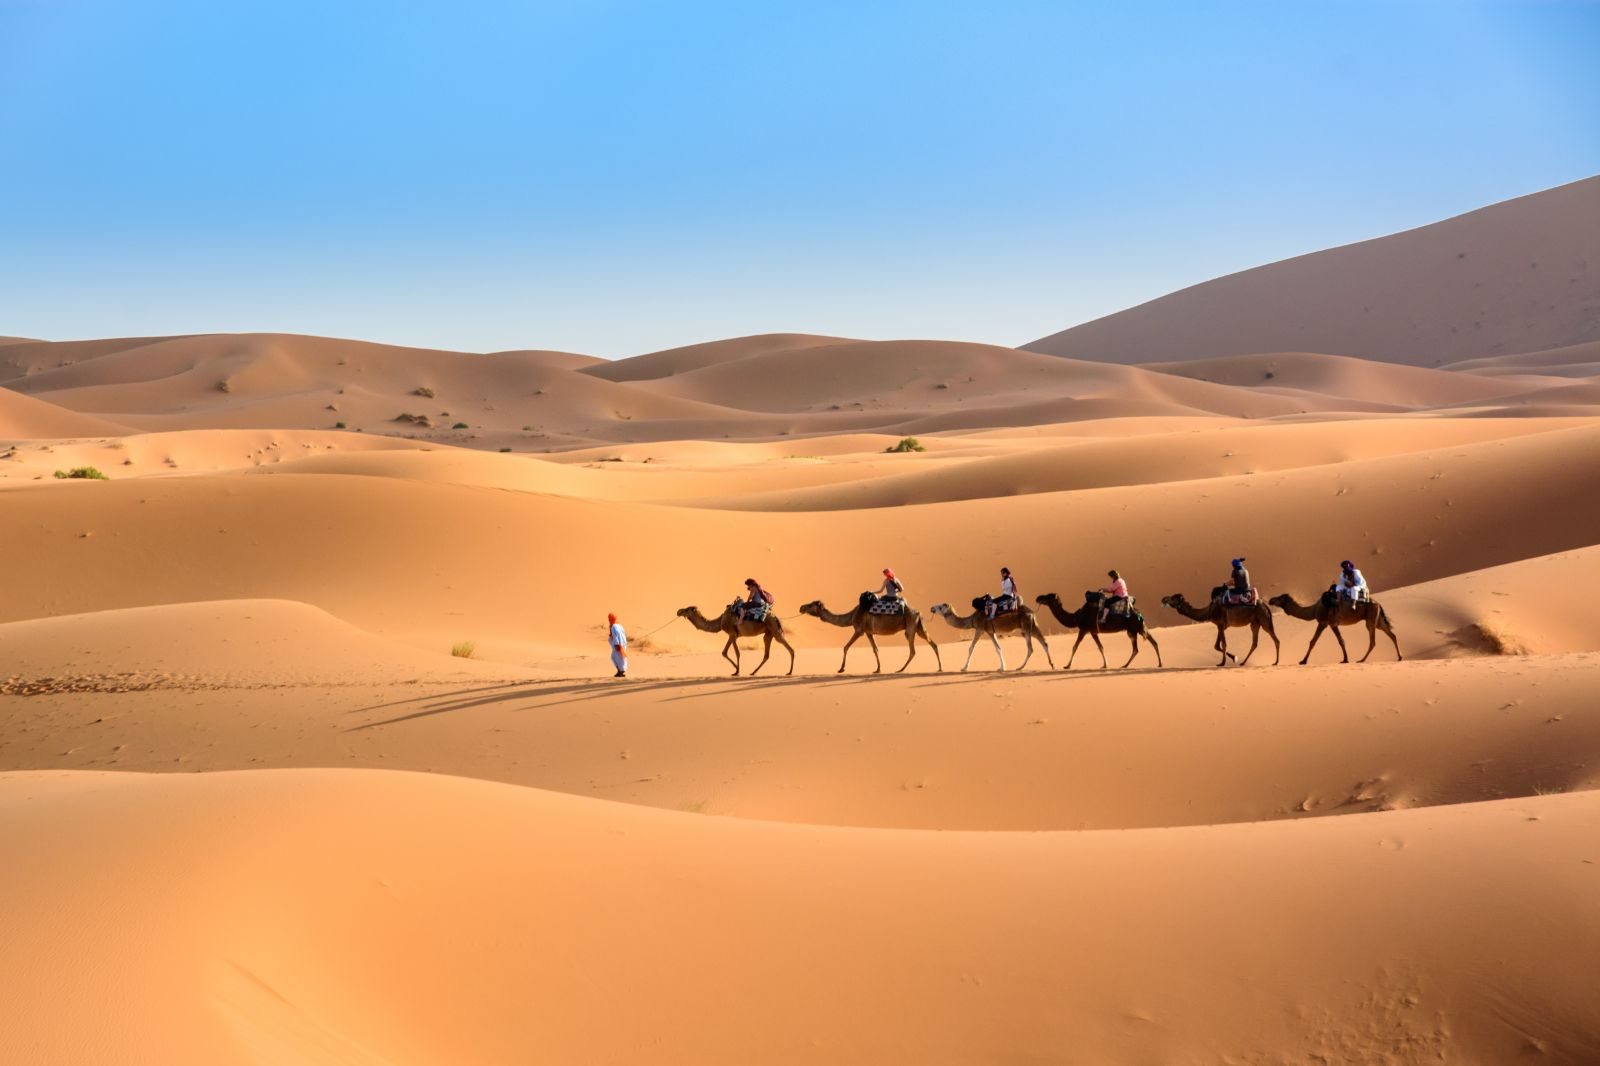 Saharan camel caravan in Morocco